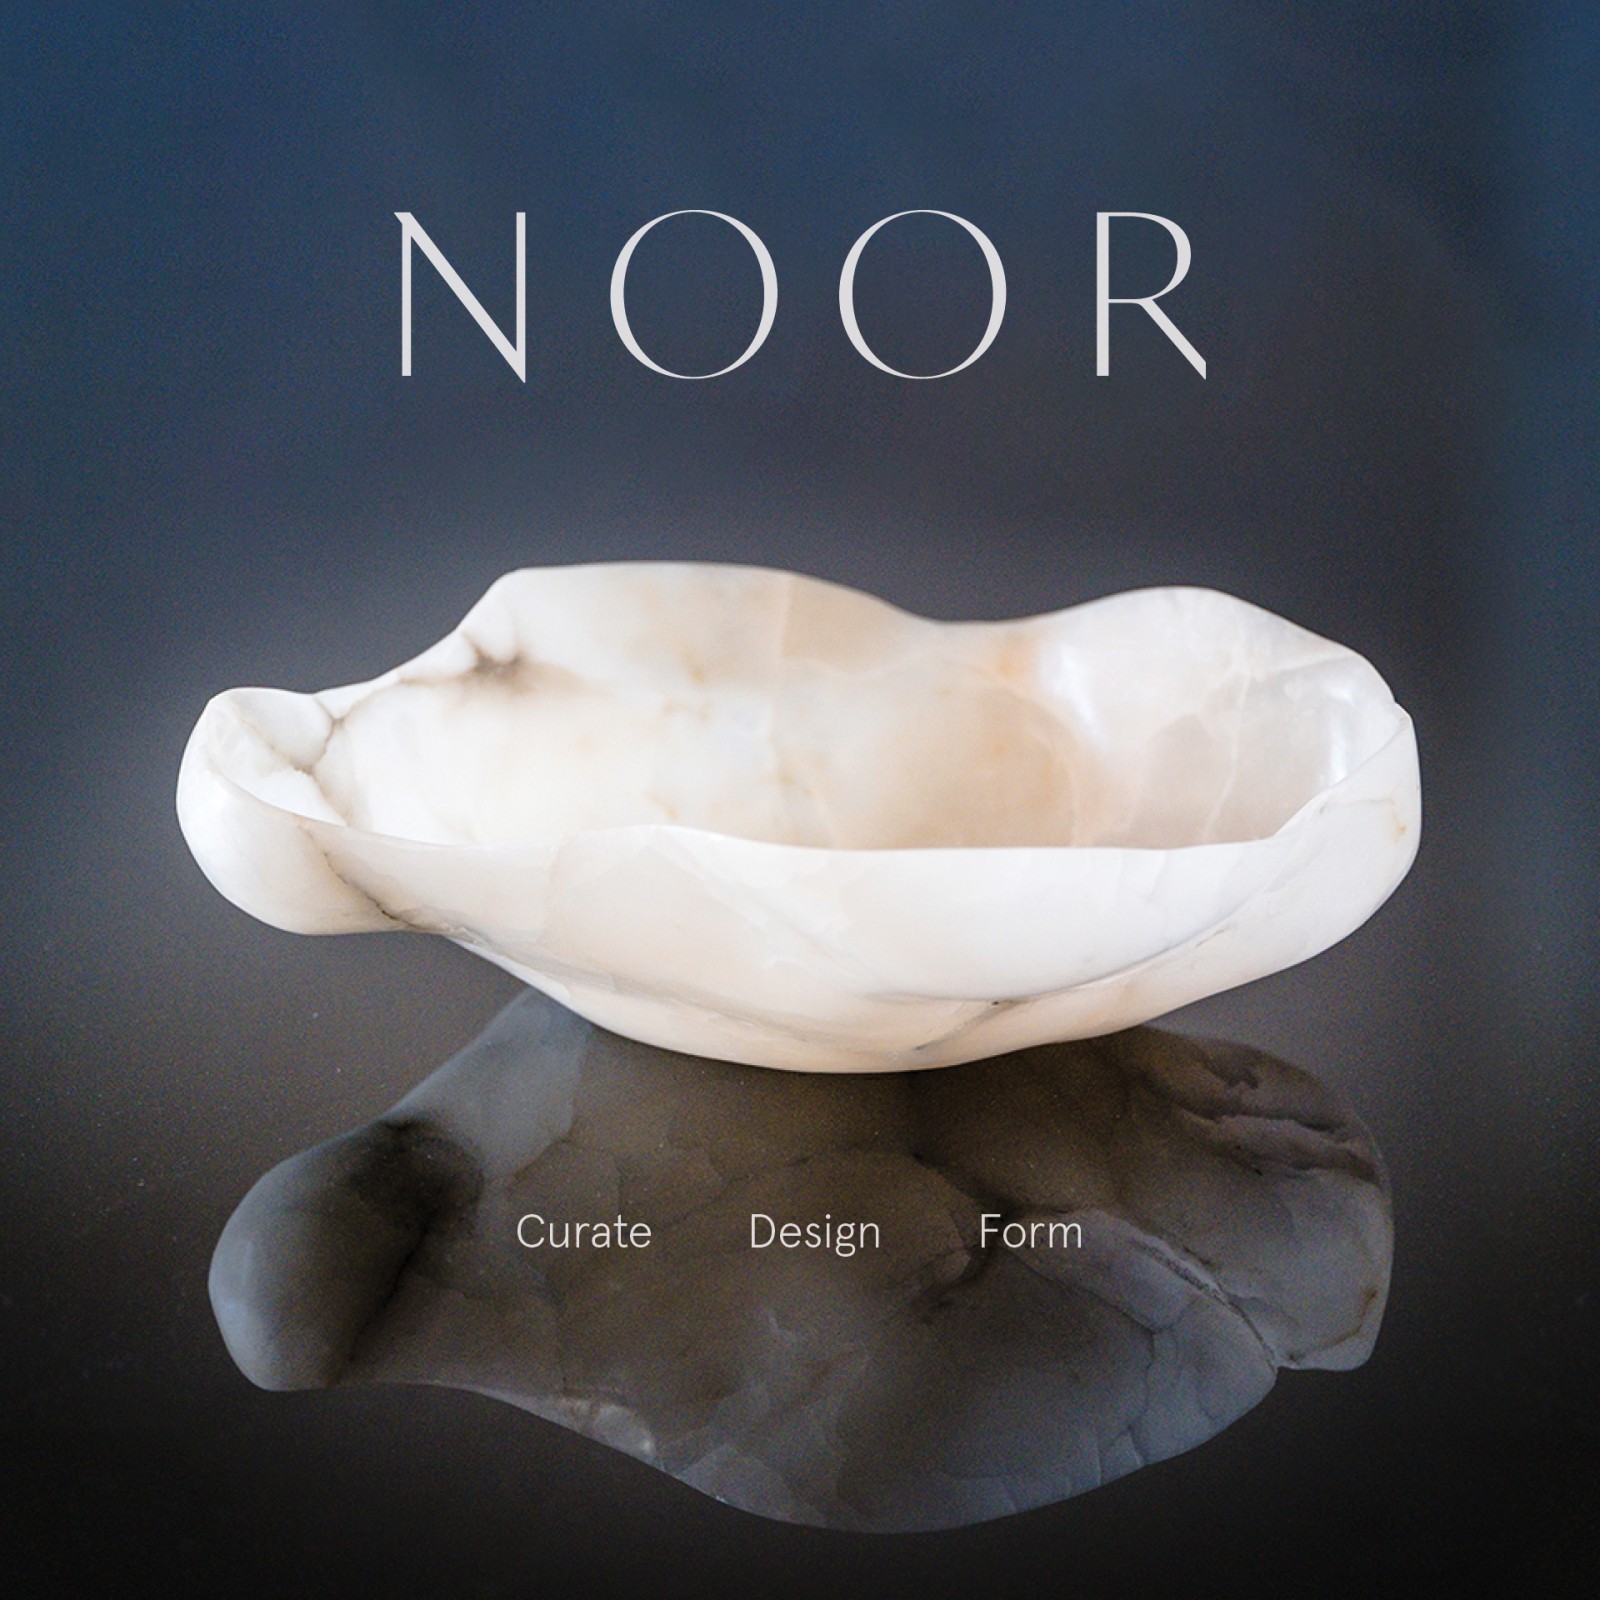 Identity Creation for New Interior Art Brand – Noor